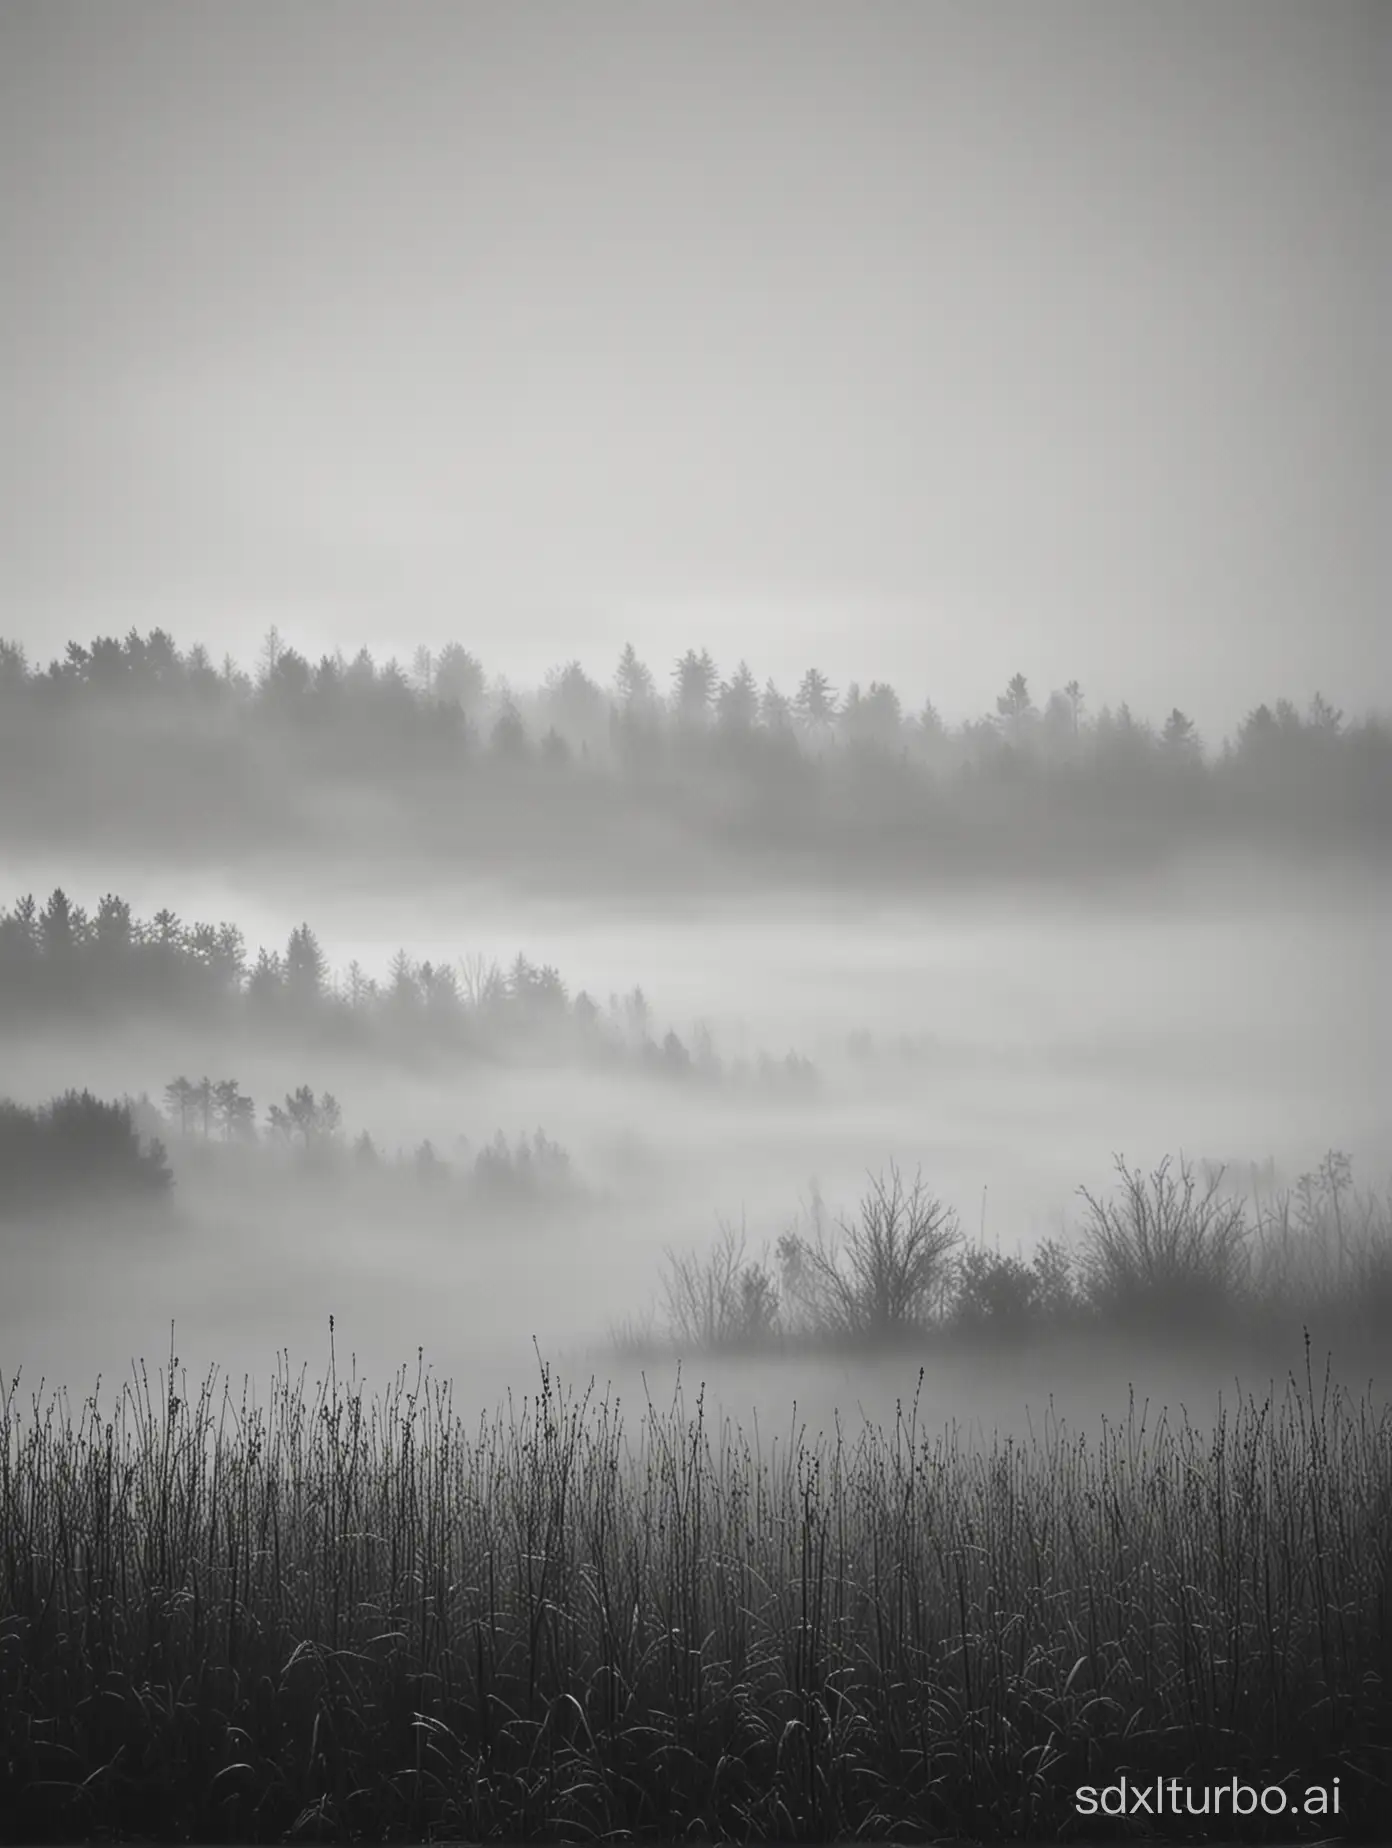 Mysterious-Fog-Enveloping-Monochrome-Landscape